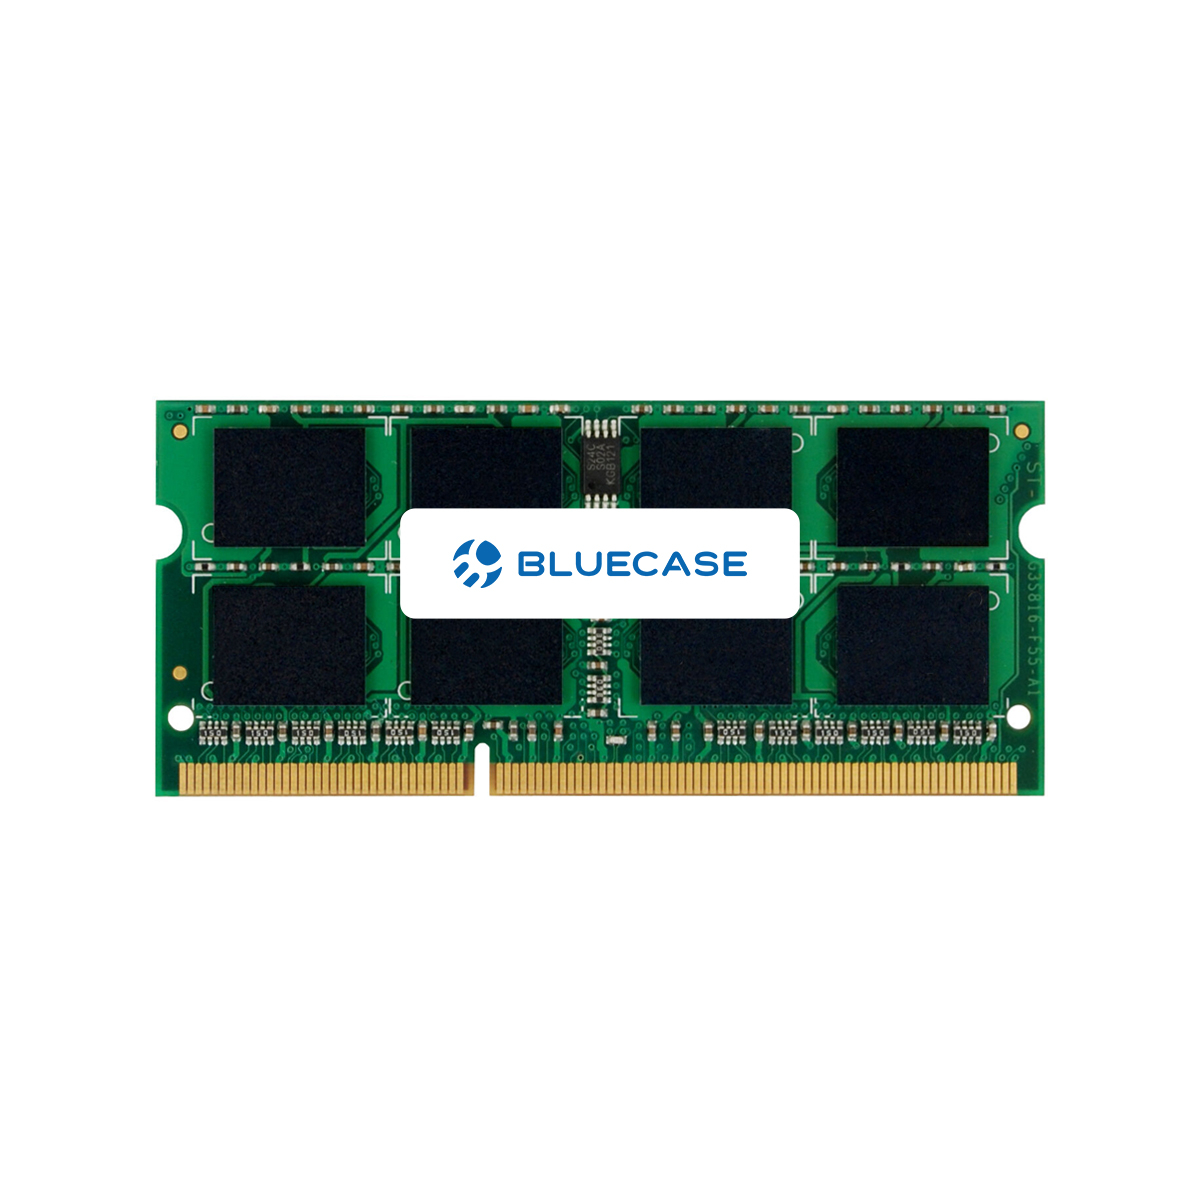 MEMÓRIA RAM DDR3 1333MHz SODIMM LOW VOLTAGE 1,35V BMDSO3D13M135VS9/2G - 1